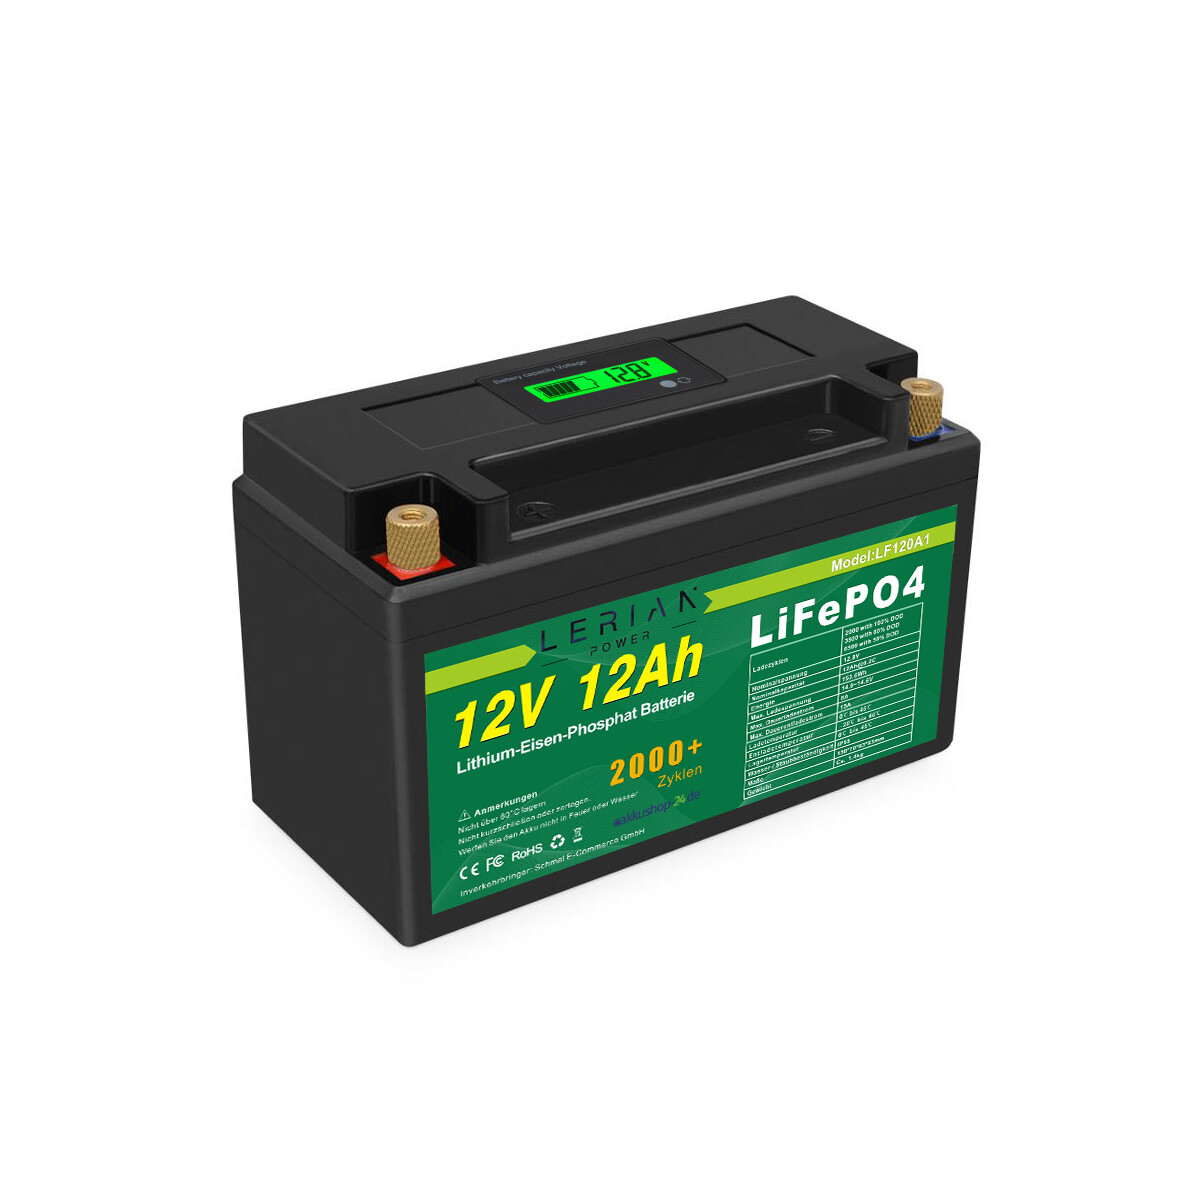 LiFePO4 Akku12V 12Ah Lithium-Eisen-Phosphat Batterie, 179,00 €